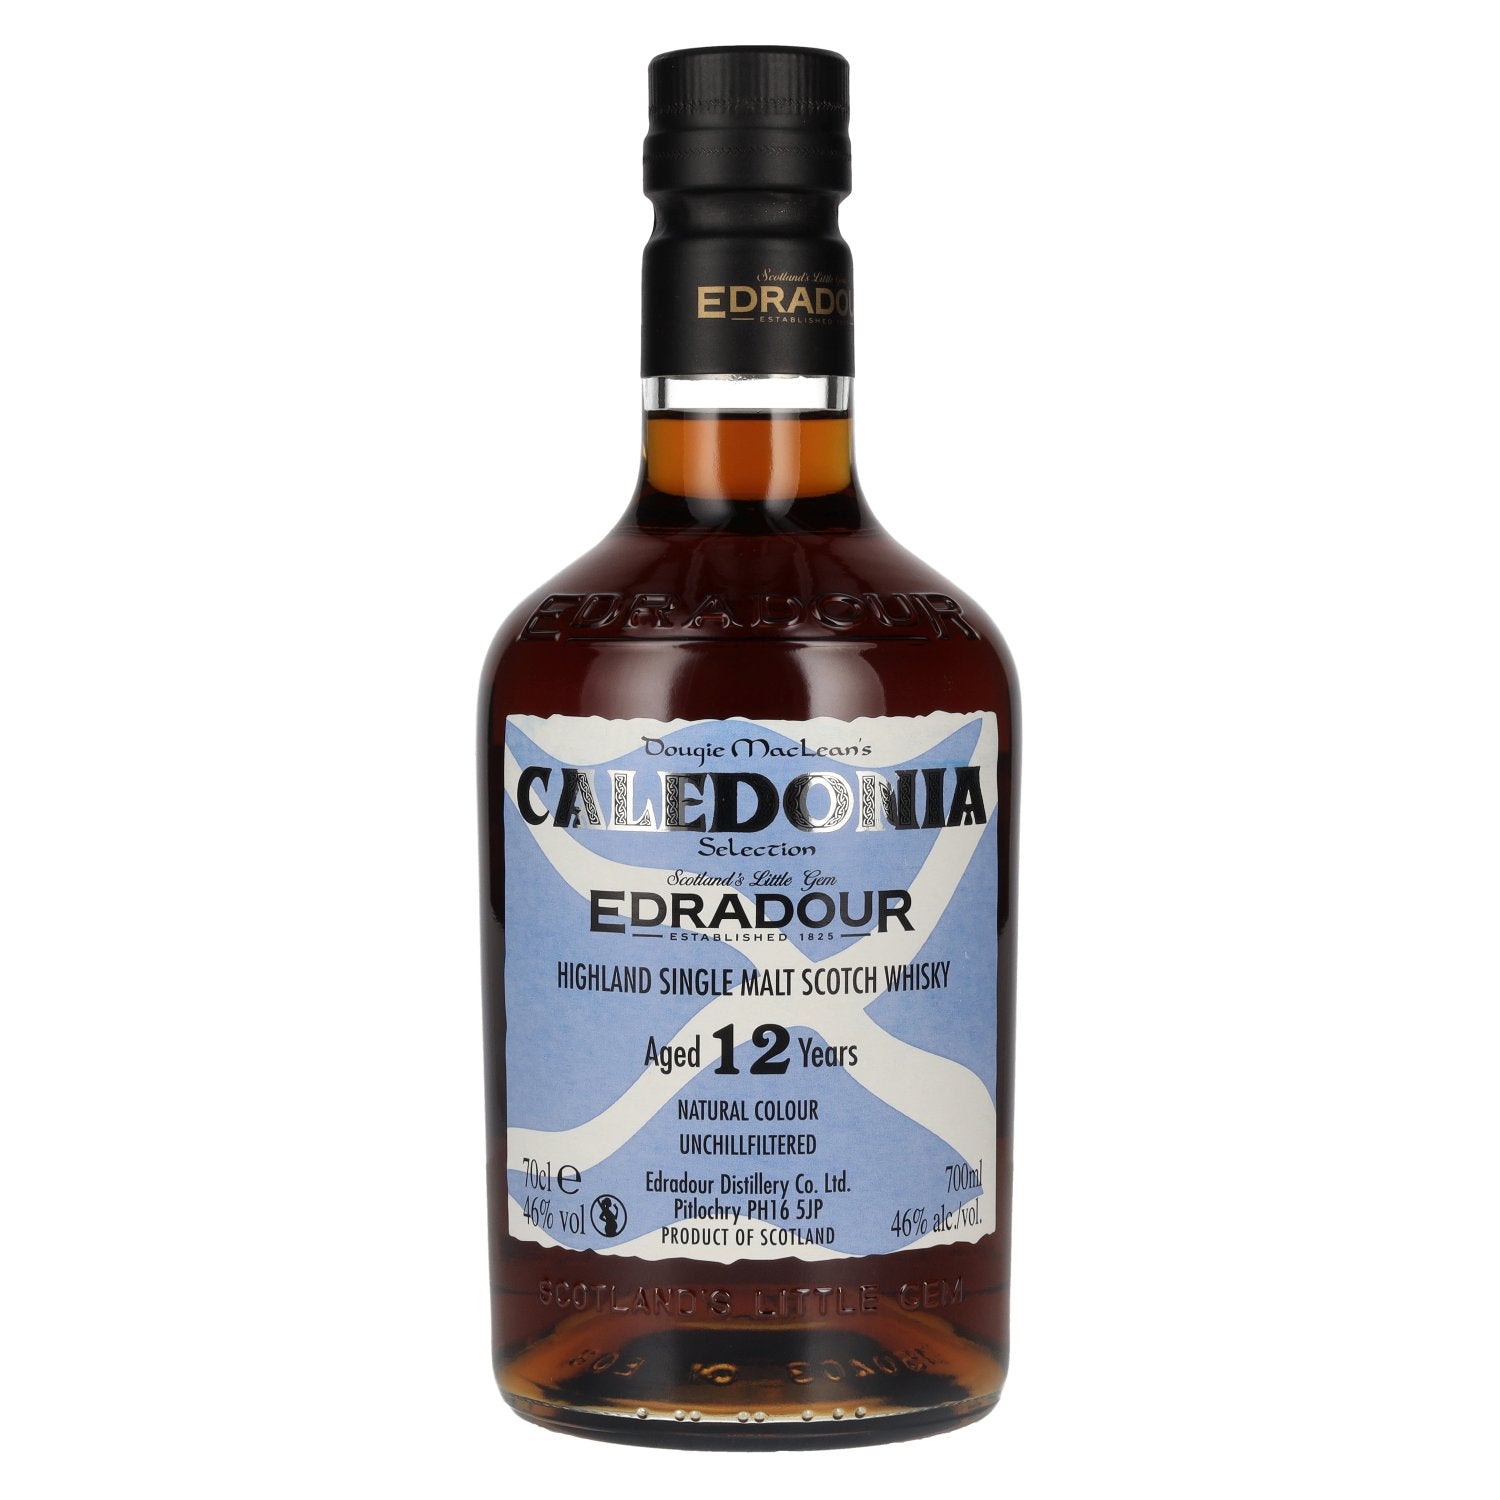 Edradour CALEDONIA 12 Years Old Highland Single Malt Scotch Whisky 46% Vol. 0,7l